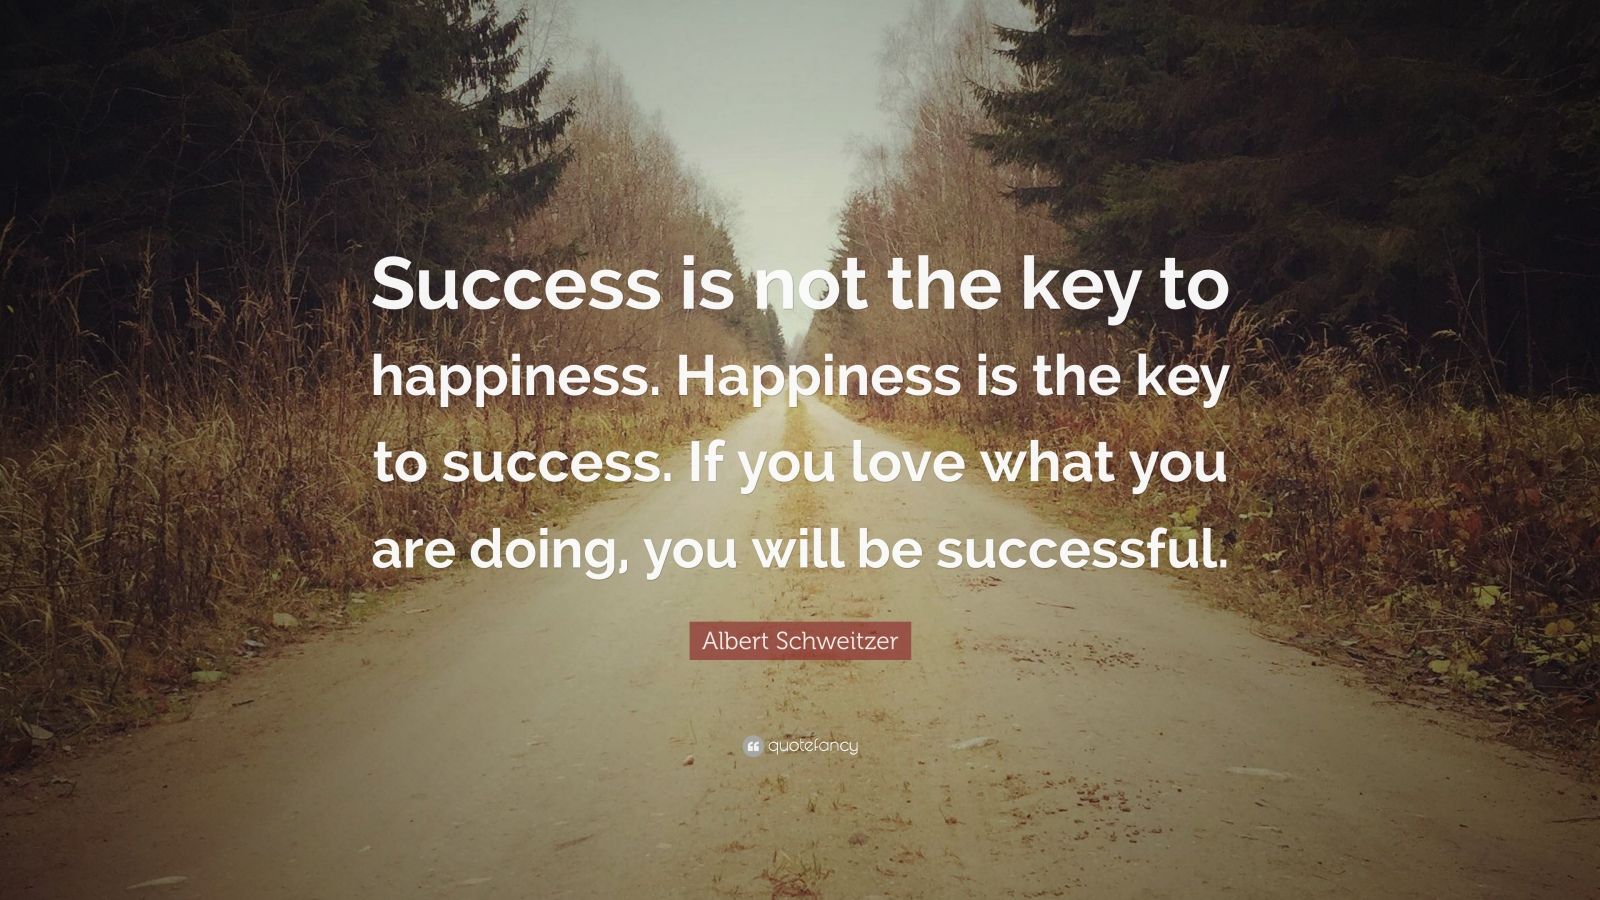 Albert Schweitzer Quote: “Success is not the key to happiness ...